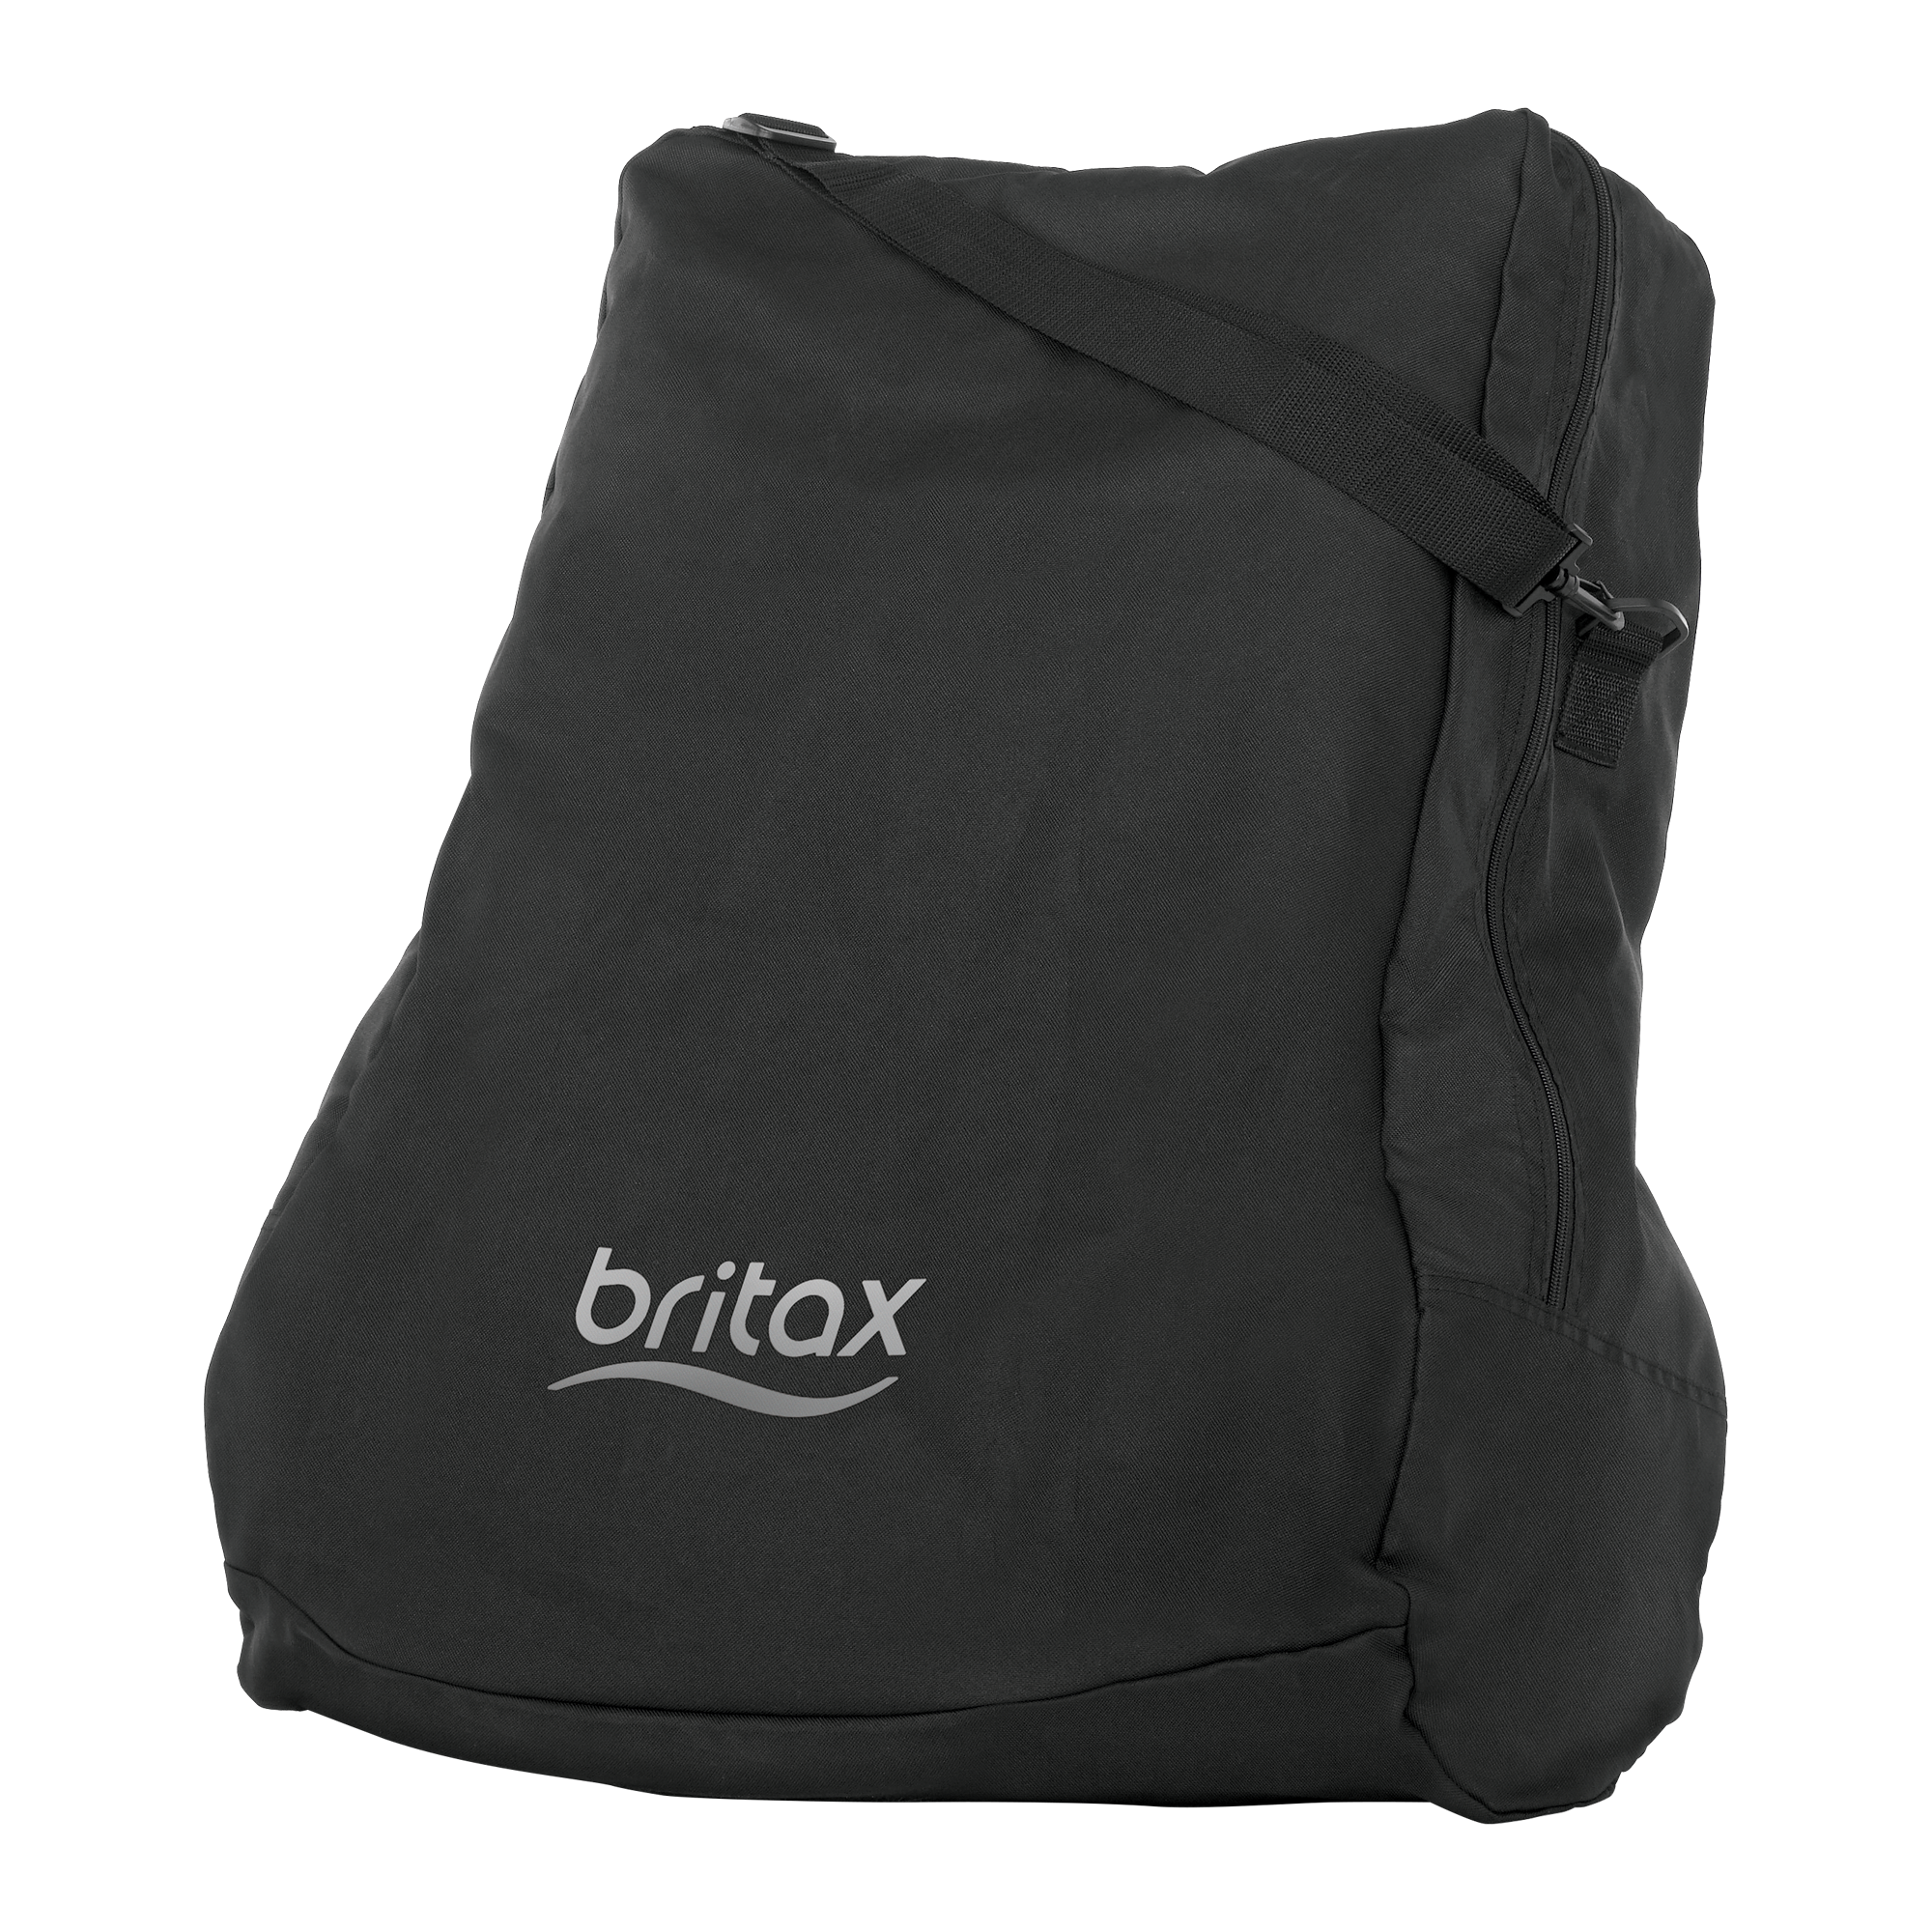 britax b safe car seat and stroller